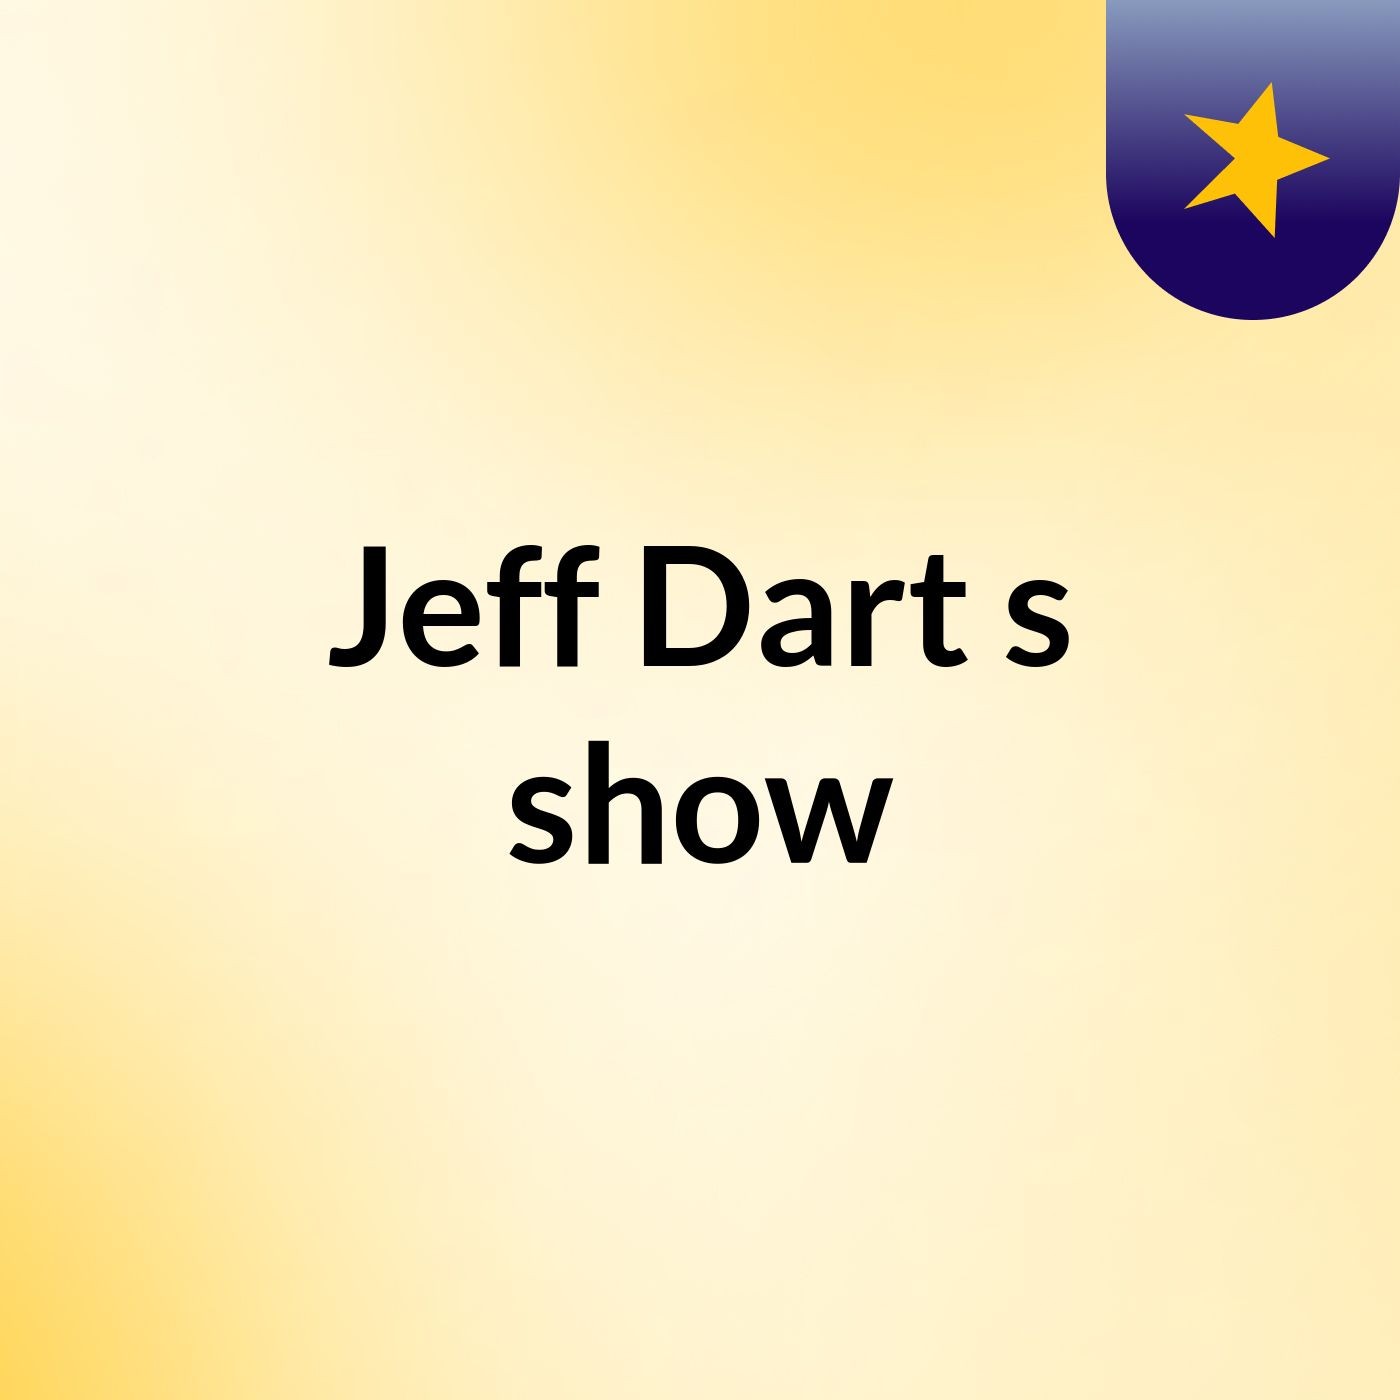 Jeff Dart's show